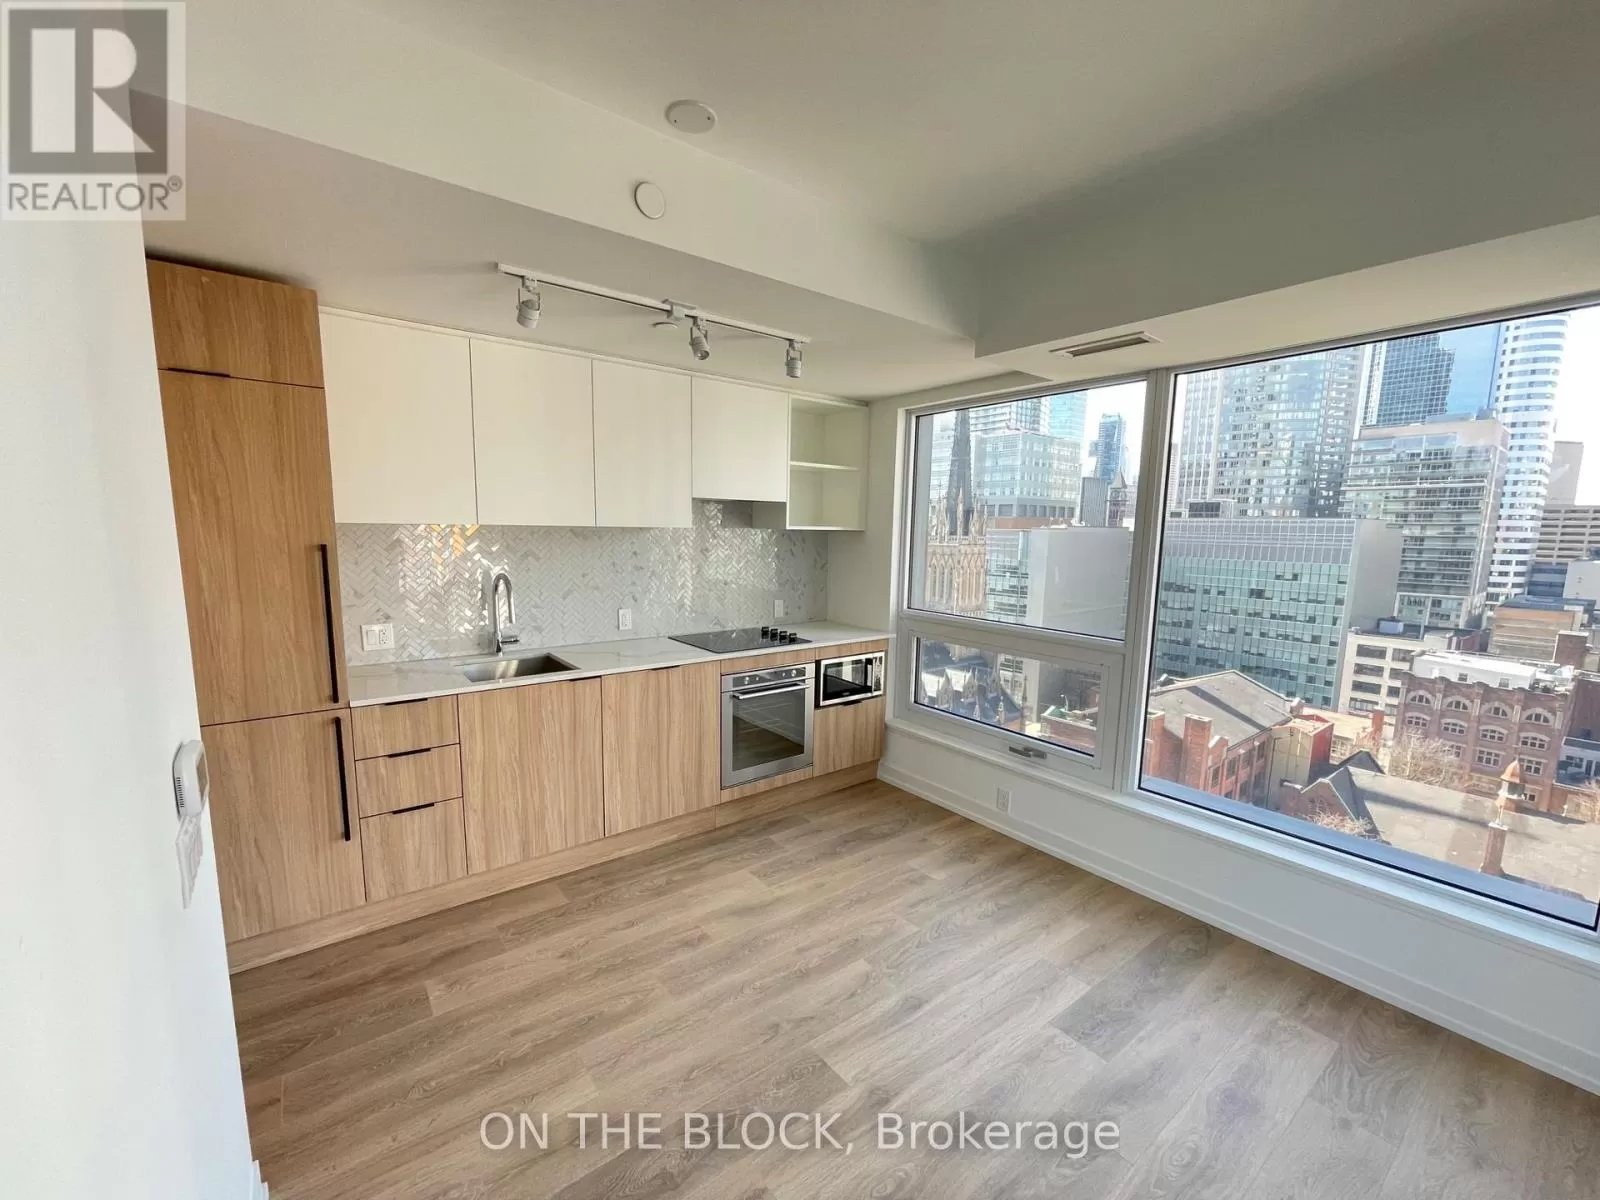 Apartment for rent: 1611 - 82 Dalhousie Street, Toronto, Ontario M5B 1Y2